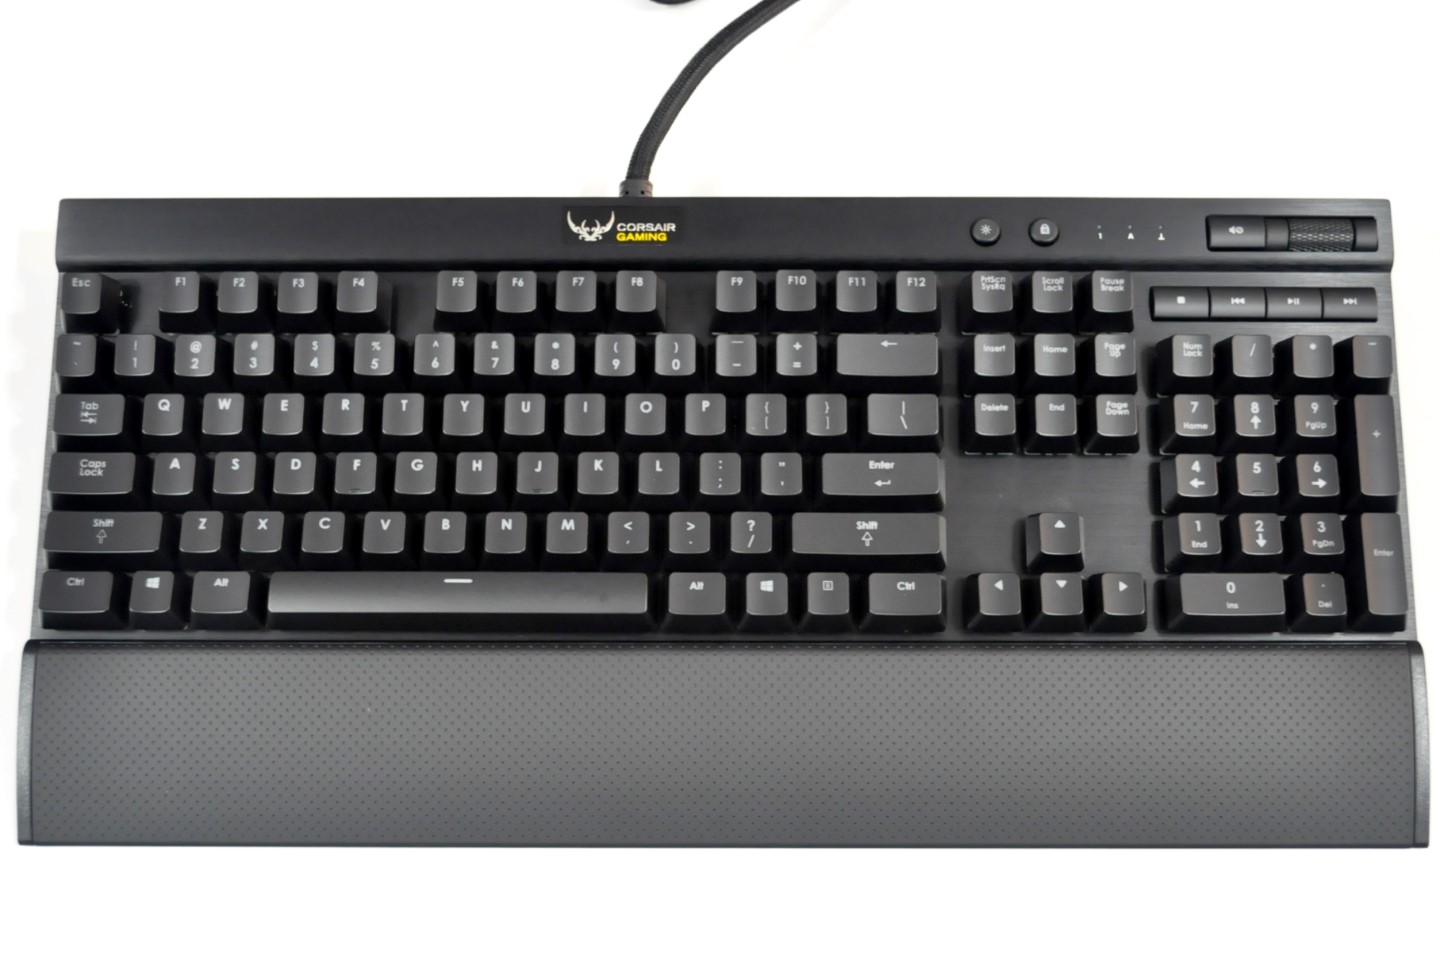 Neuropati Specificitet Nyttig The Corsair Gaming K70 RGB Mechanical Keyboard - Corsair Gaming K70 RGB  Mechanical Keyboard Review